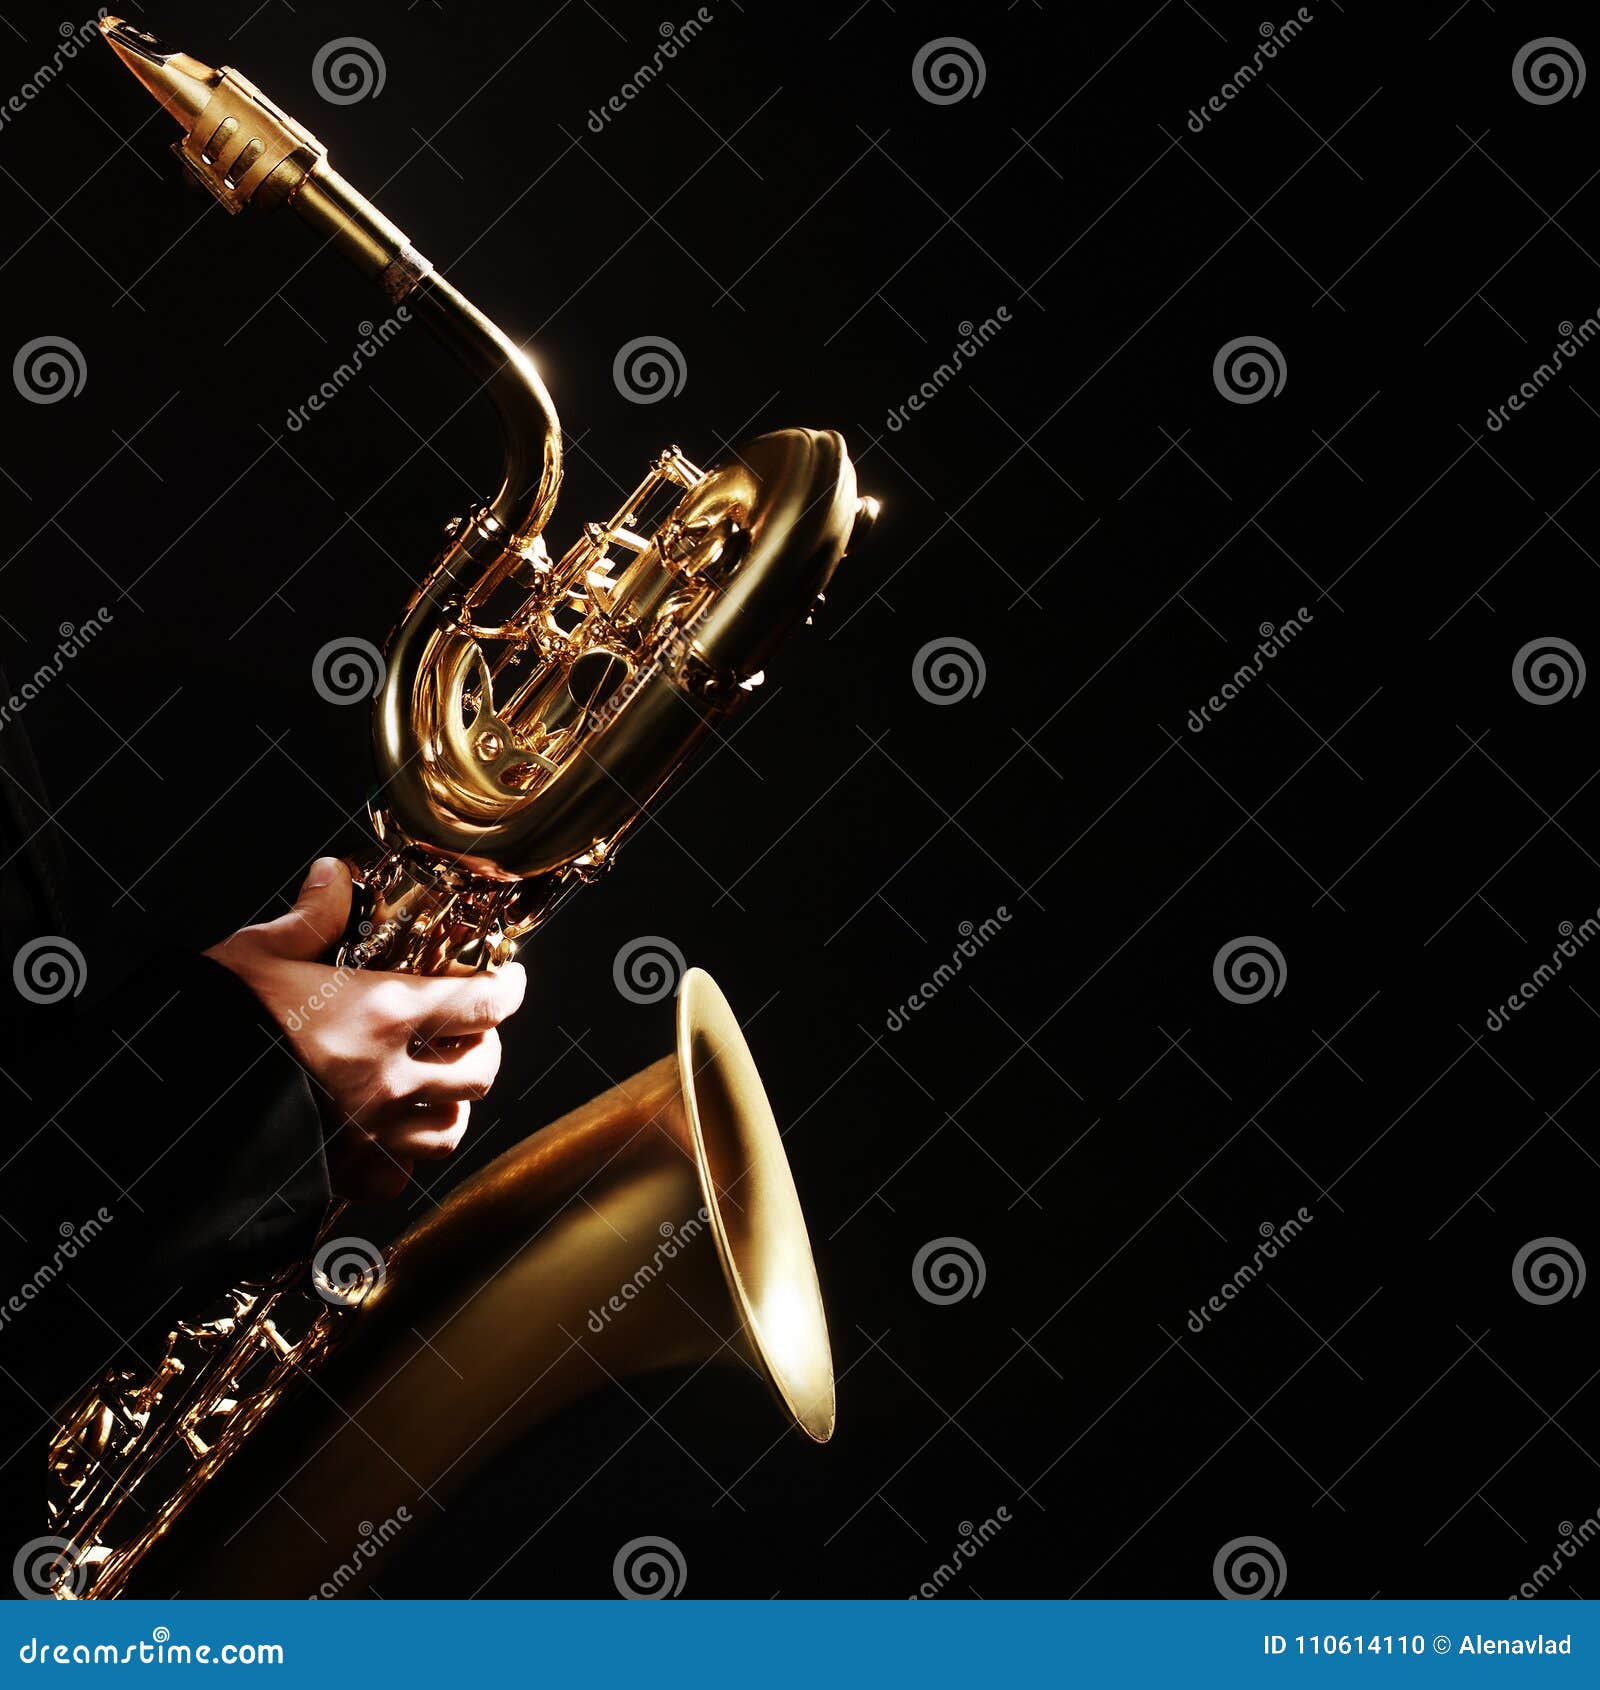 saxophone jazz music instruments baritone sax